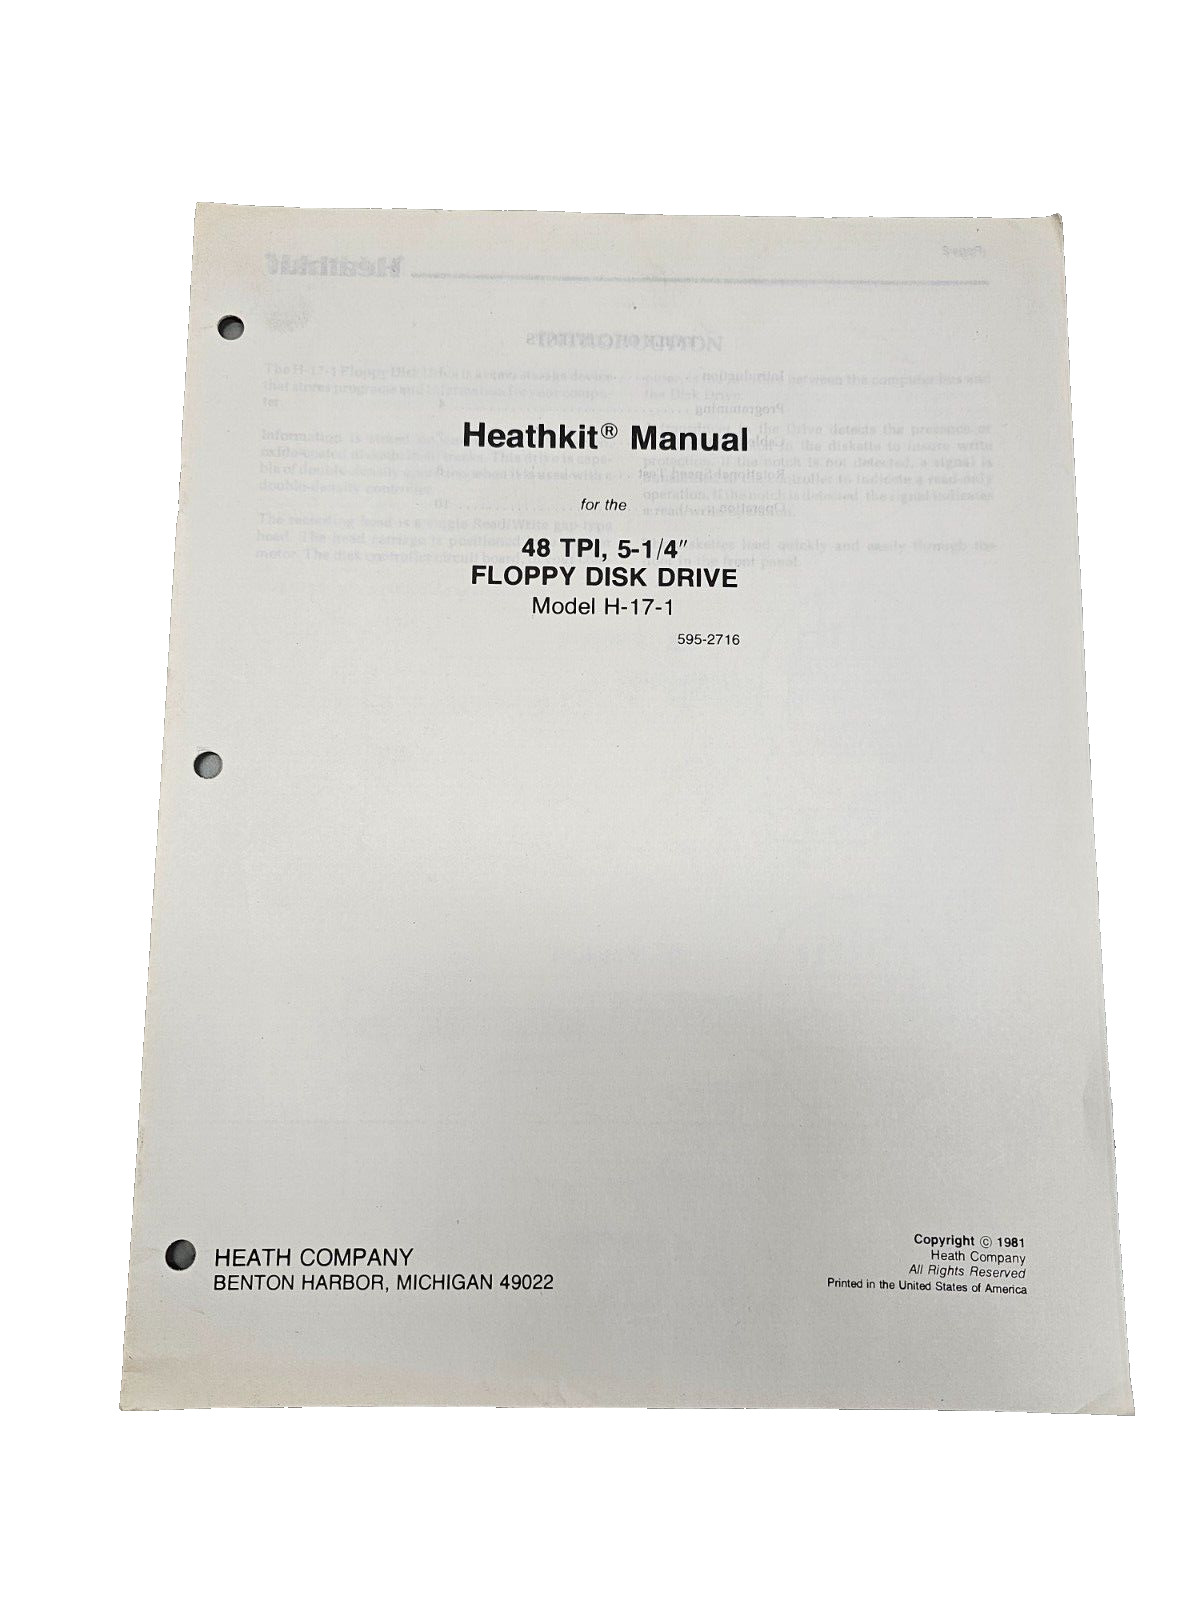 Vintage 70's Heathkit Manual for 48 TPI 5-1/4